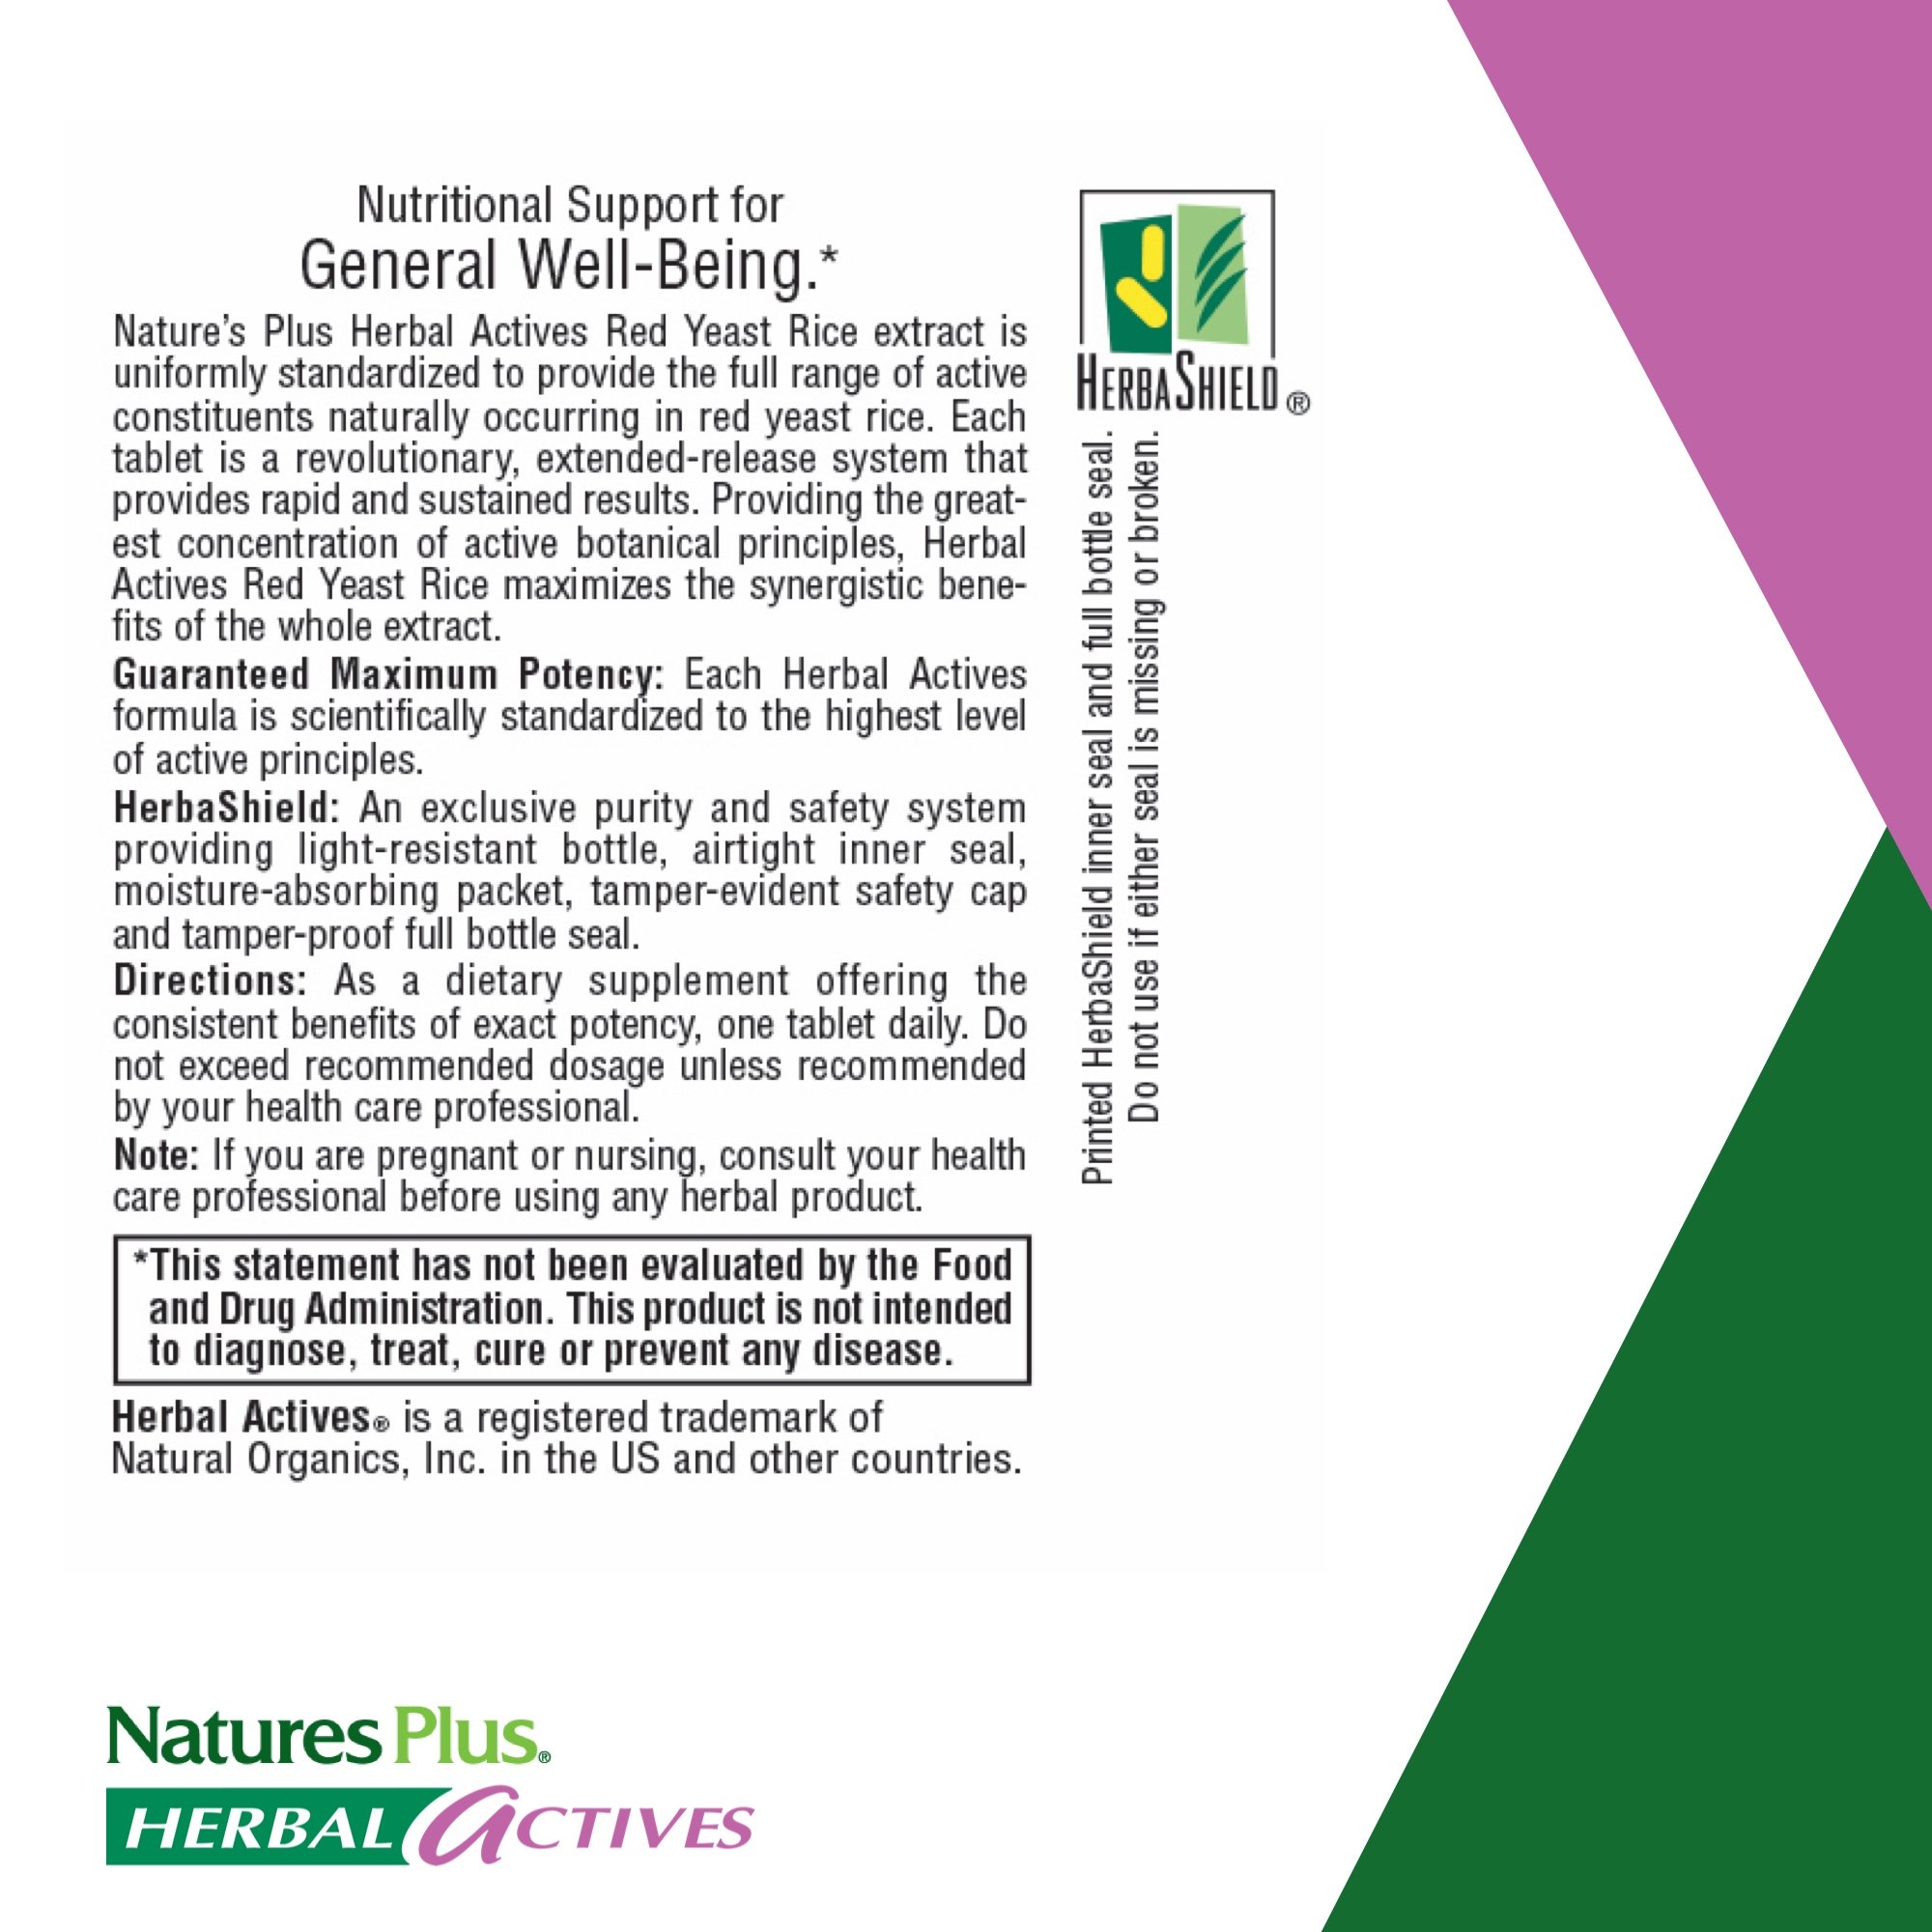 NaturesPlus Herbal Actives Red Yeast Rice, Extended Release - 600mg, 60 Vegan Tablets - Herbal Supplement - Cholesterol Support - Vegetarian, Gluten-Free - 60 Servings